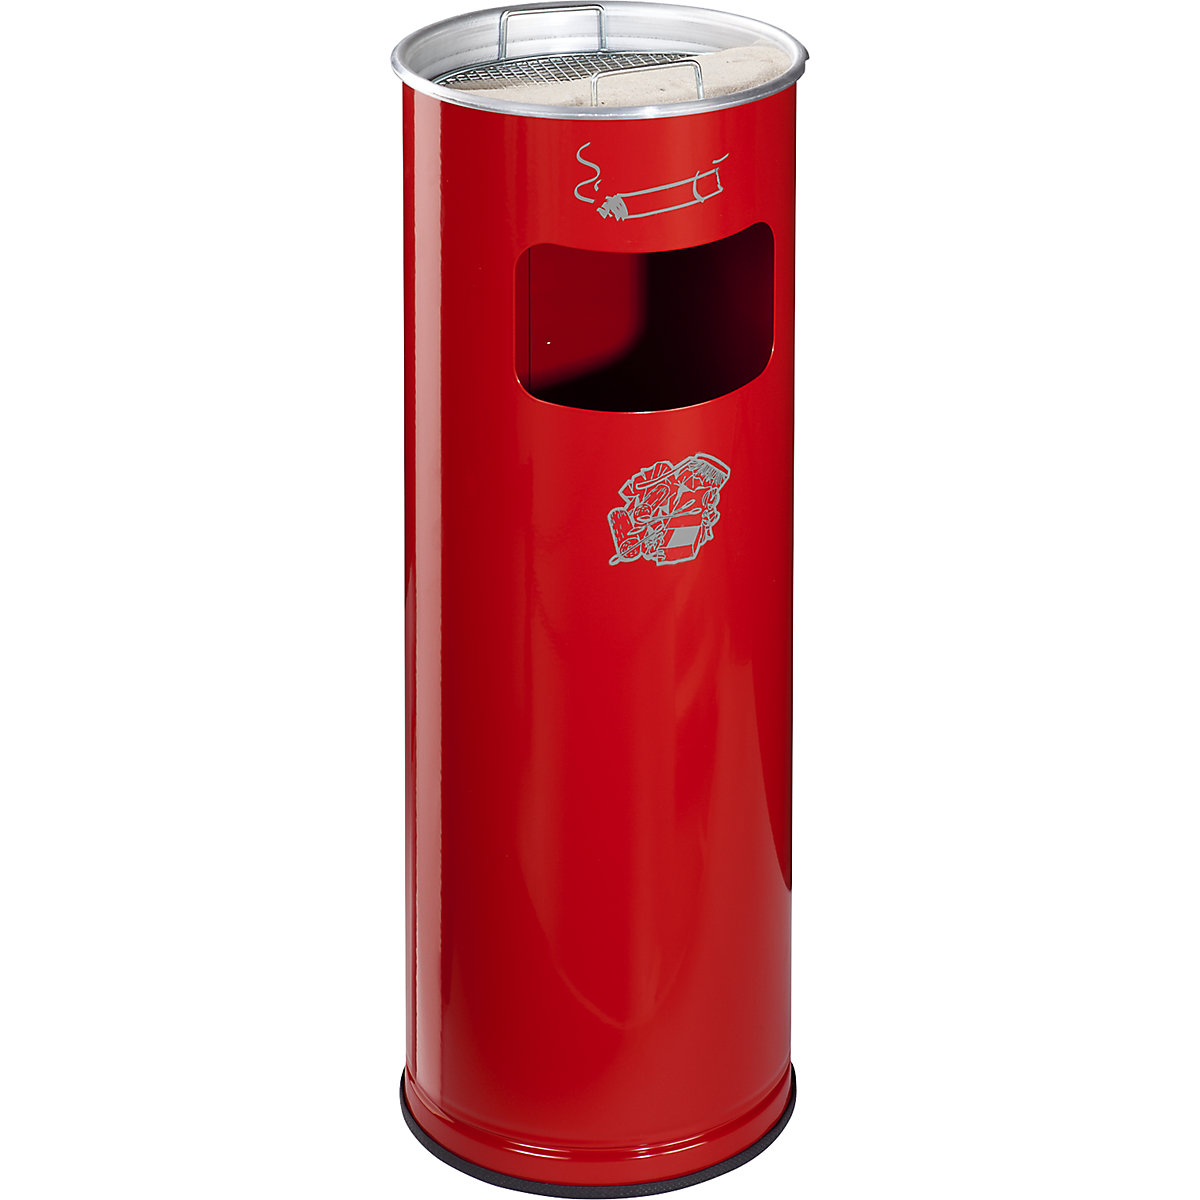 Kombinirana pepeljara – VAR, volumen 17 l, VxØ 660 x 230 mm, čelik, u vatreno crvenoj boji-6